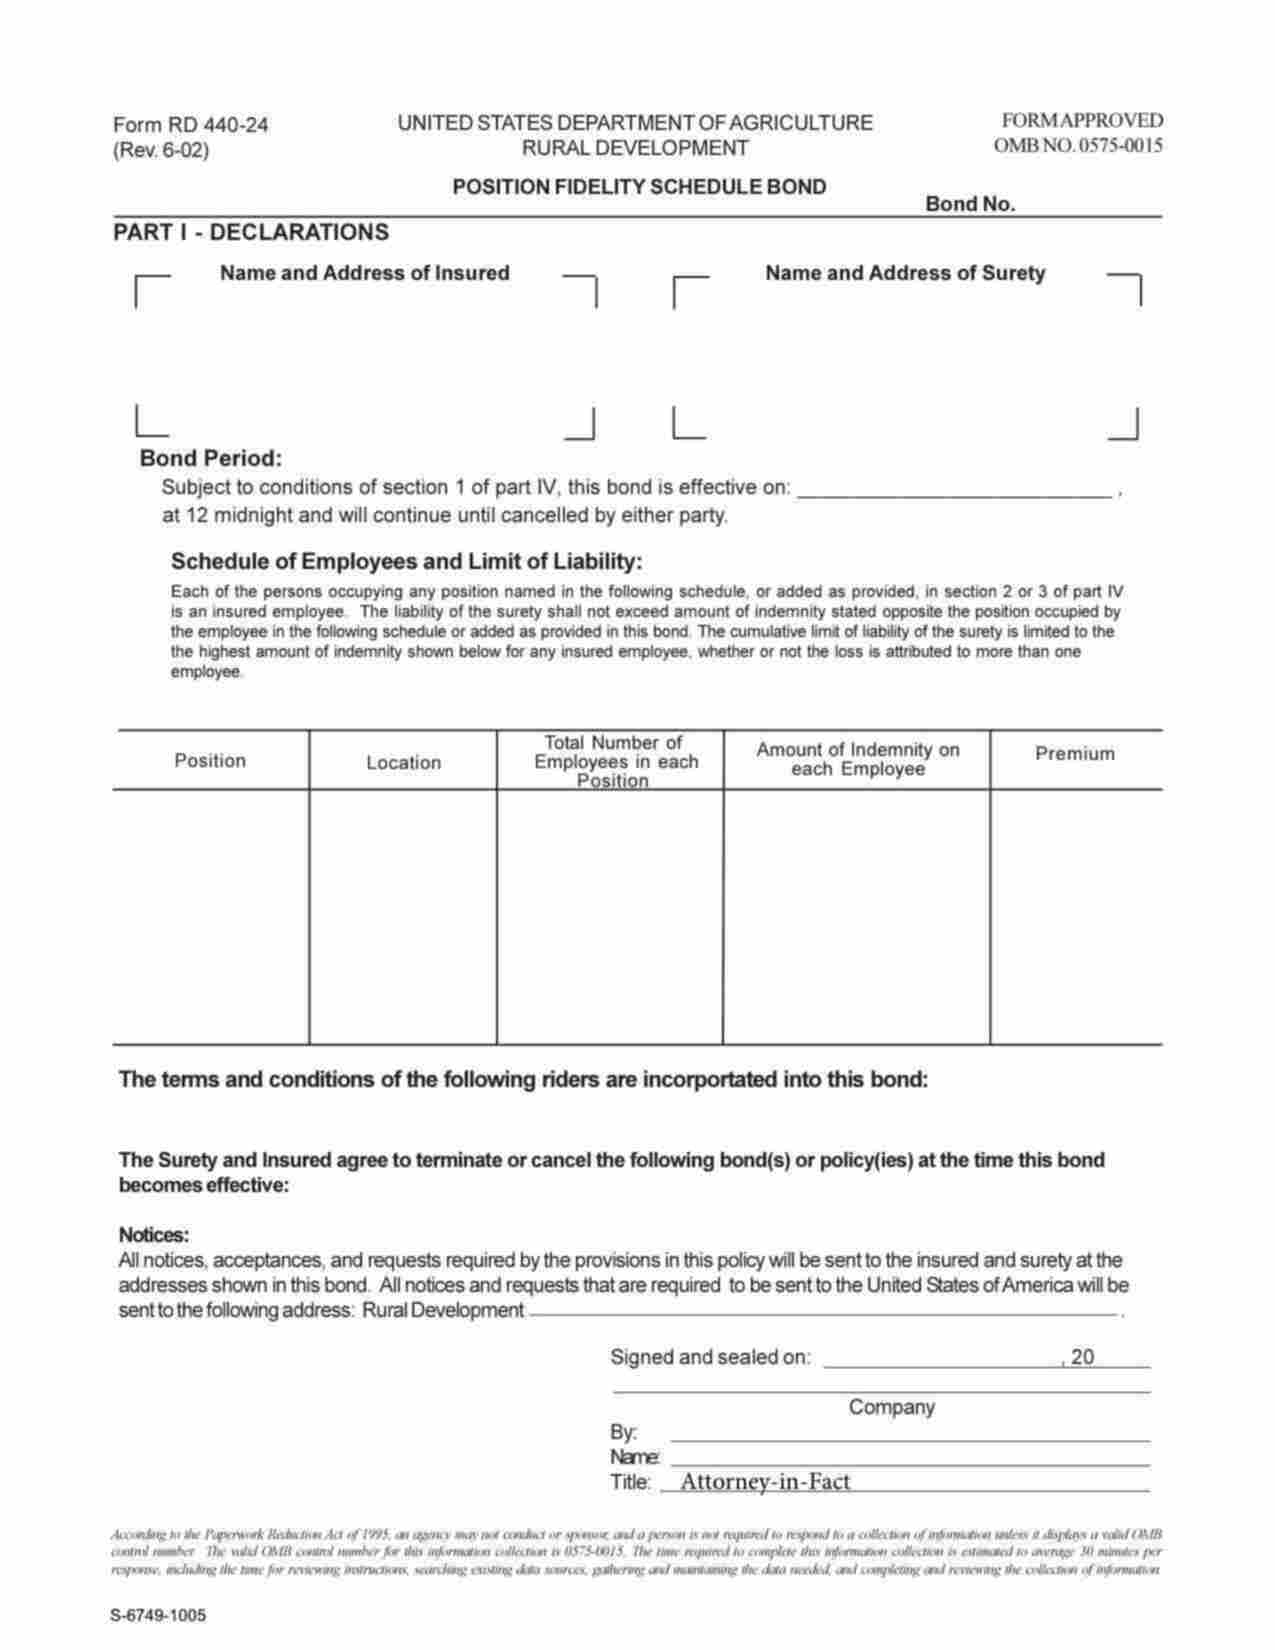 Federal RD 440-24 Position Fidelity Bond Form